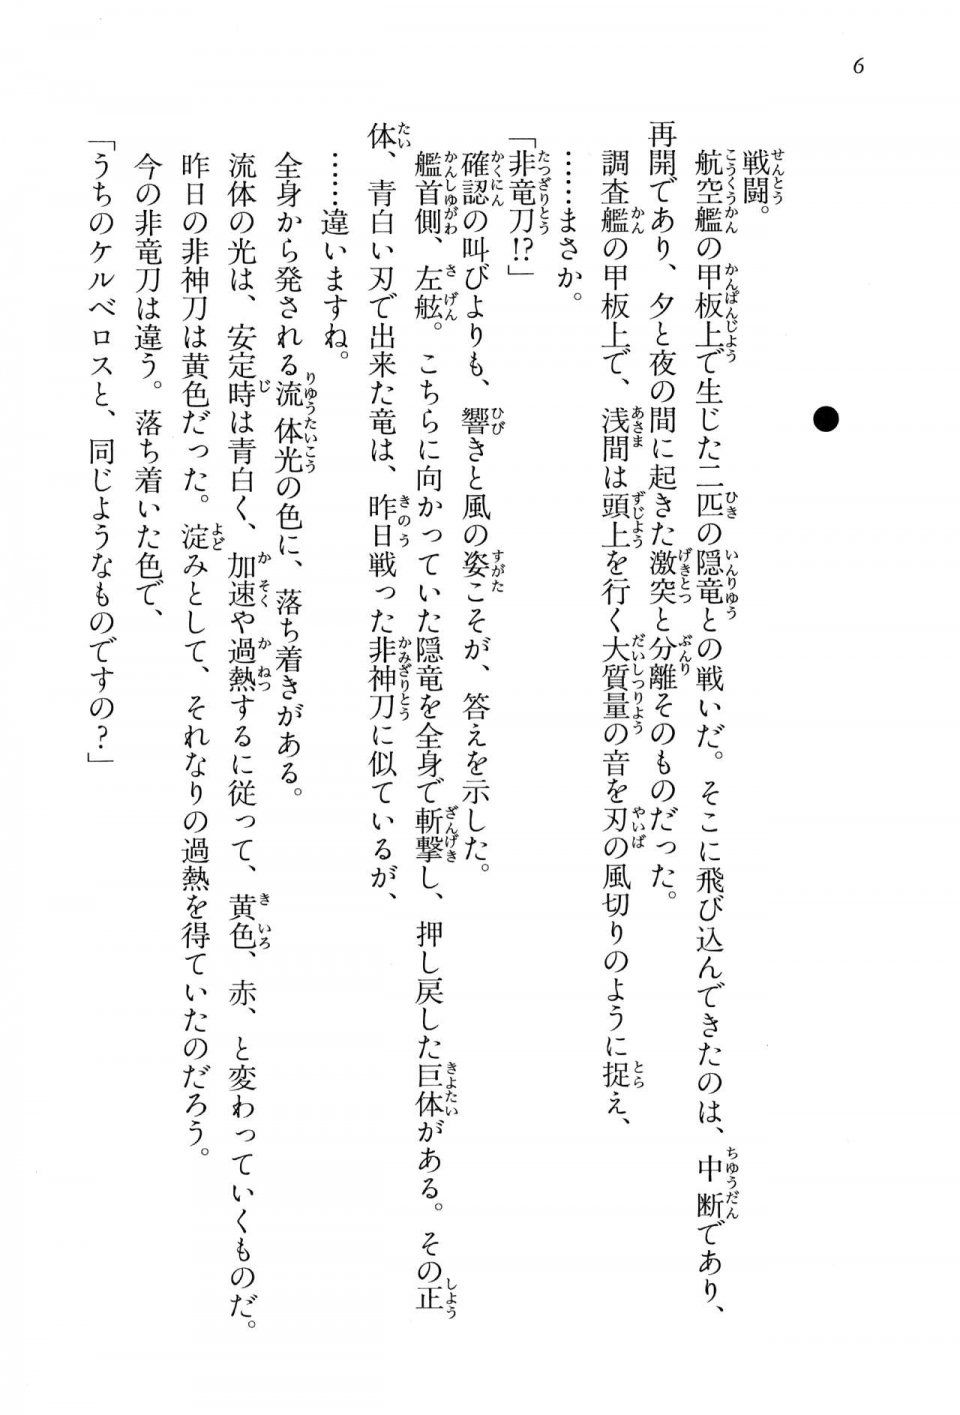 Kyoukai Senjou no Horizon BD Special Mininovel Vol 4(2B) - Photo #10